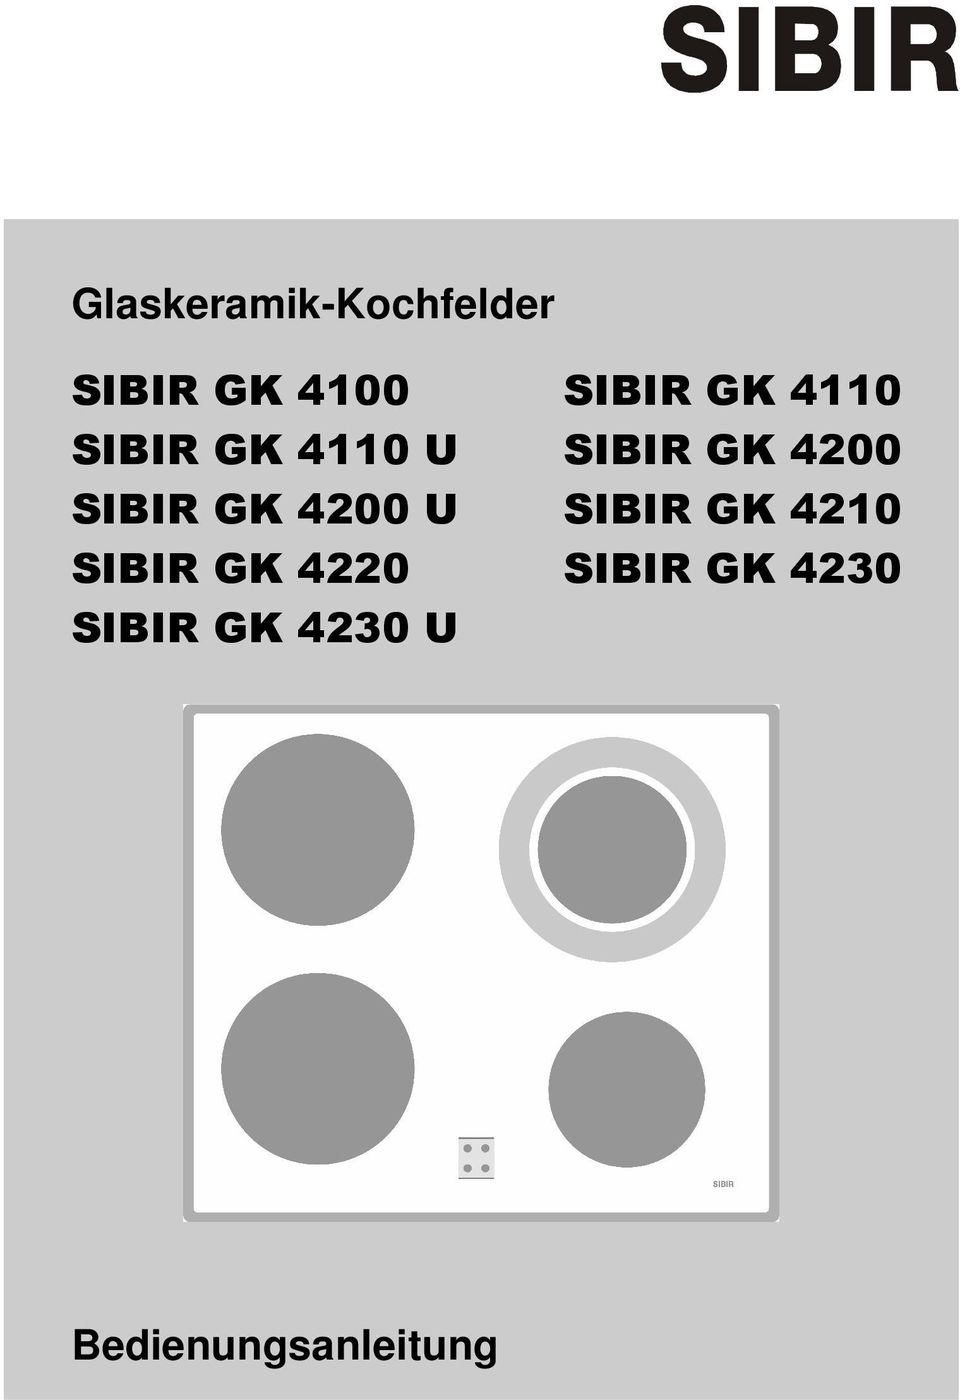 GK 4200 U SIBIR GK 4210 SIBIR GK 4220 SIBIR